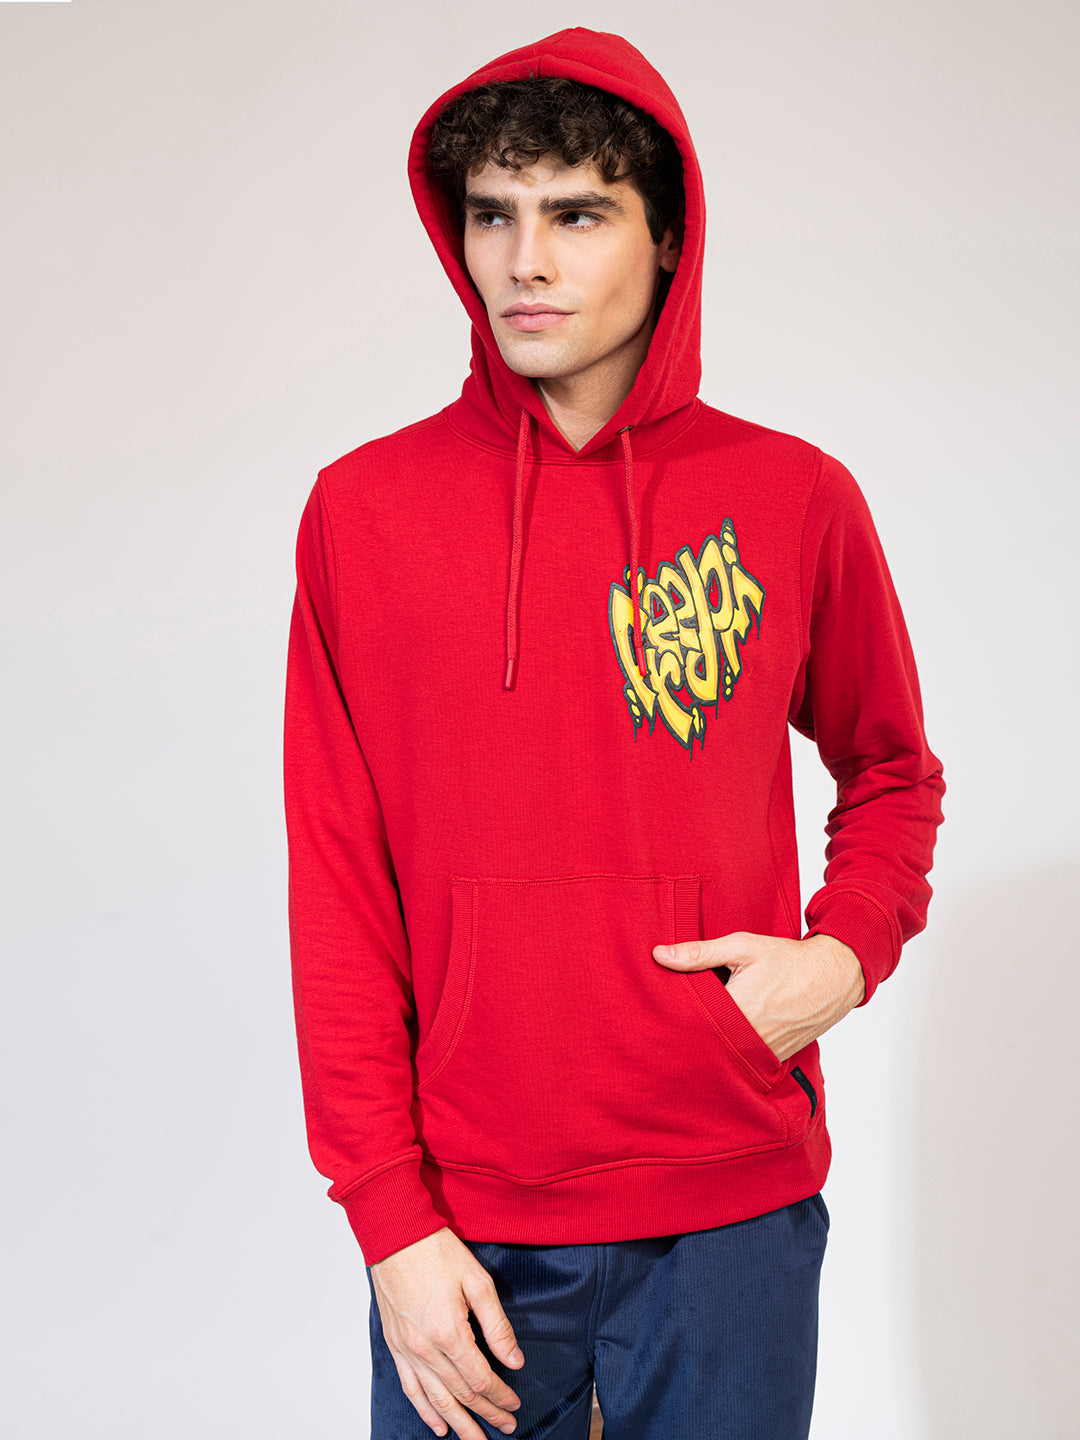 Punk FREEDOM-GRAFFITI Red Sweatshirt